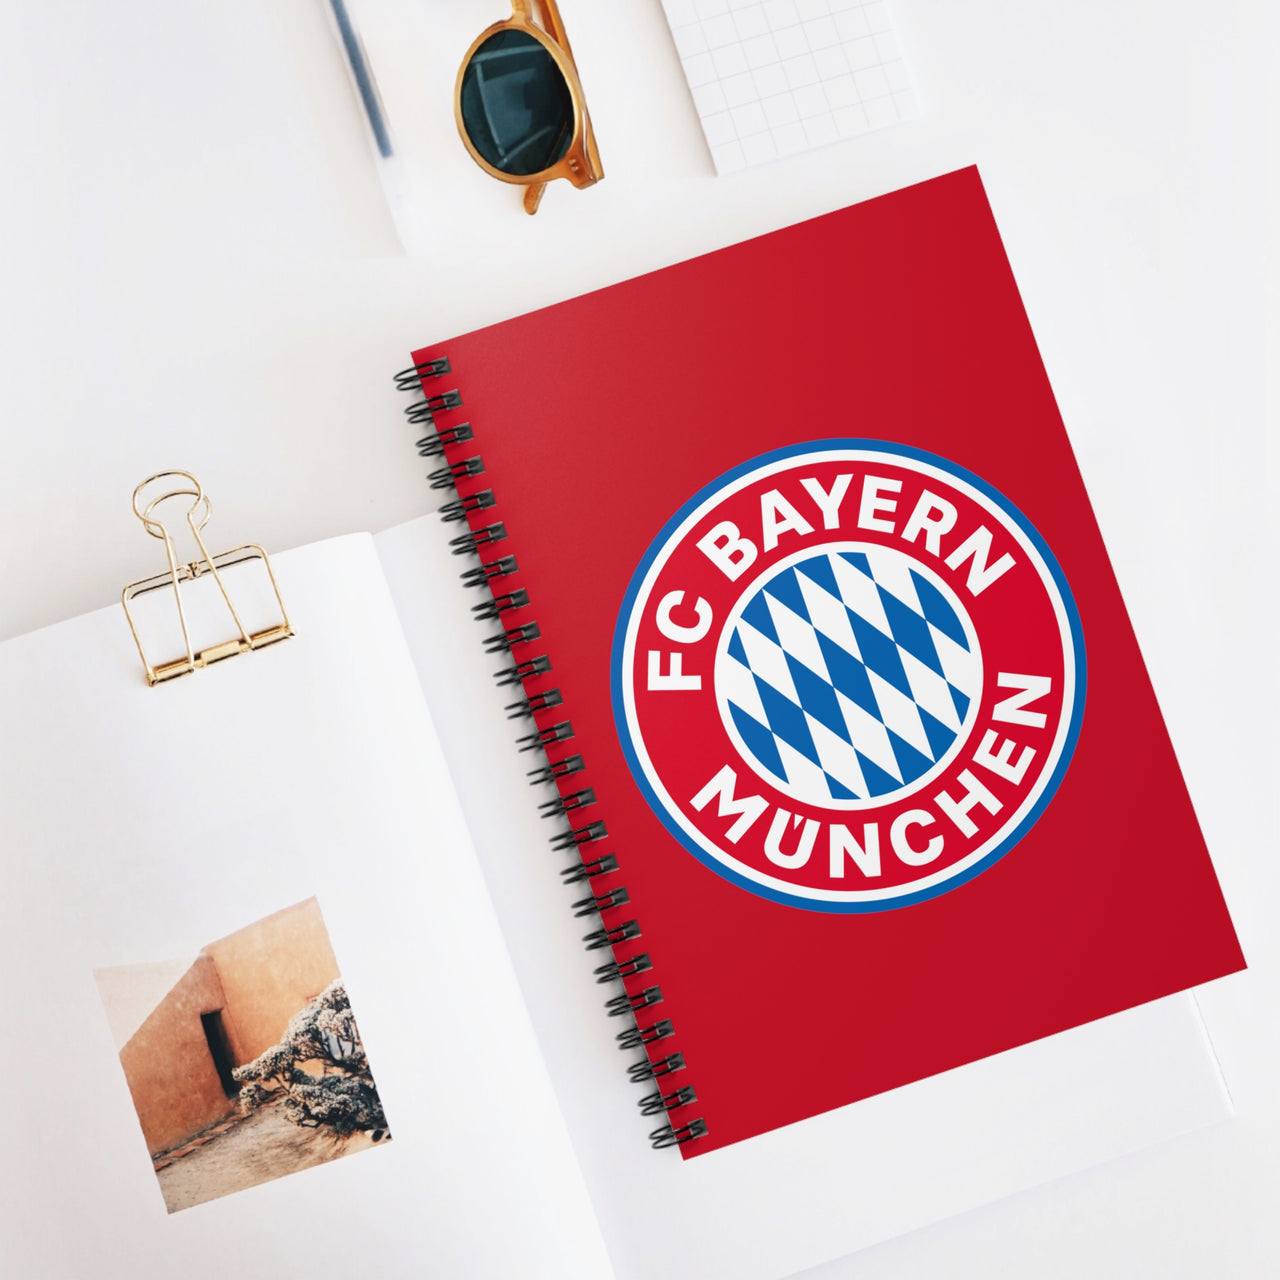 Bayern Munich Spiral Notebook - Ruled Line